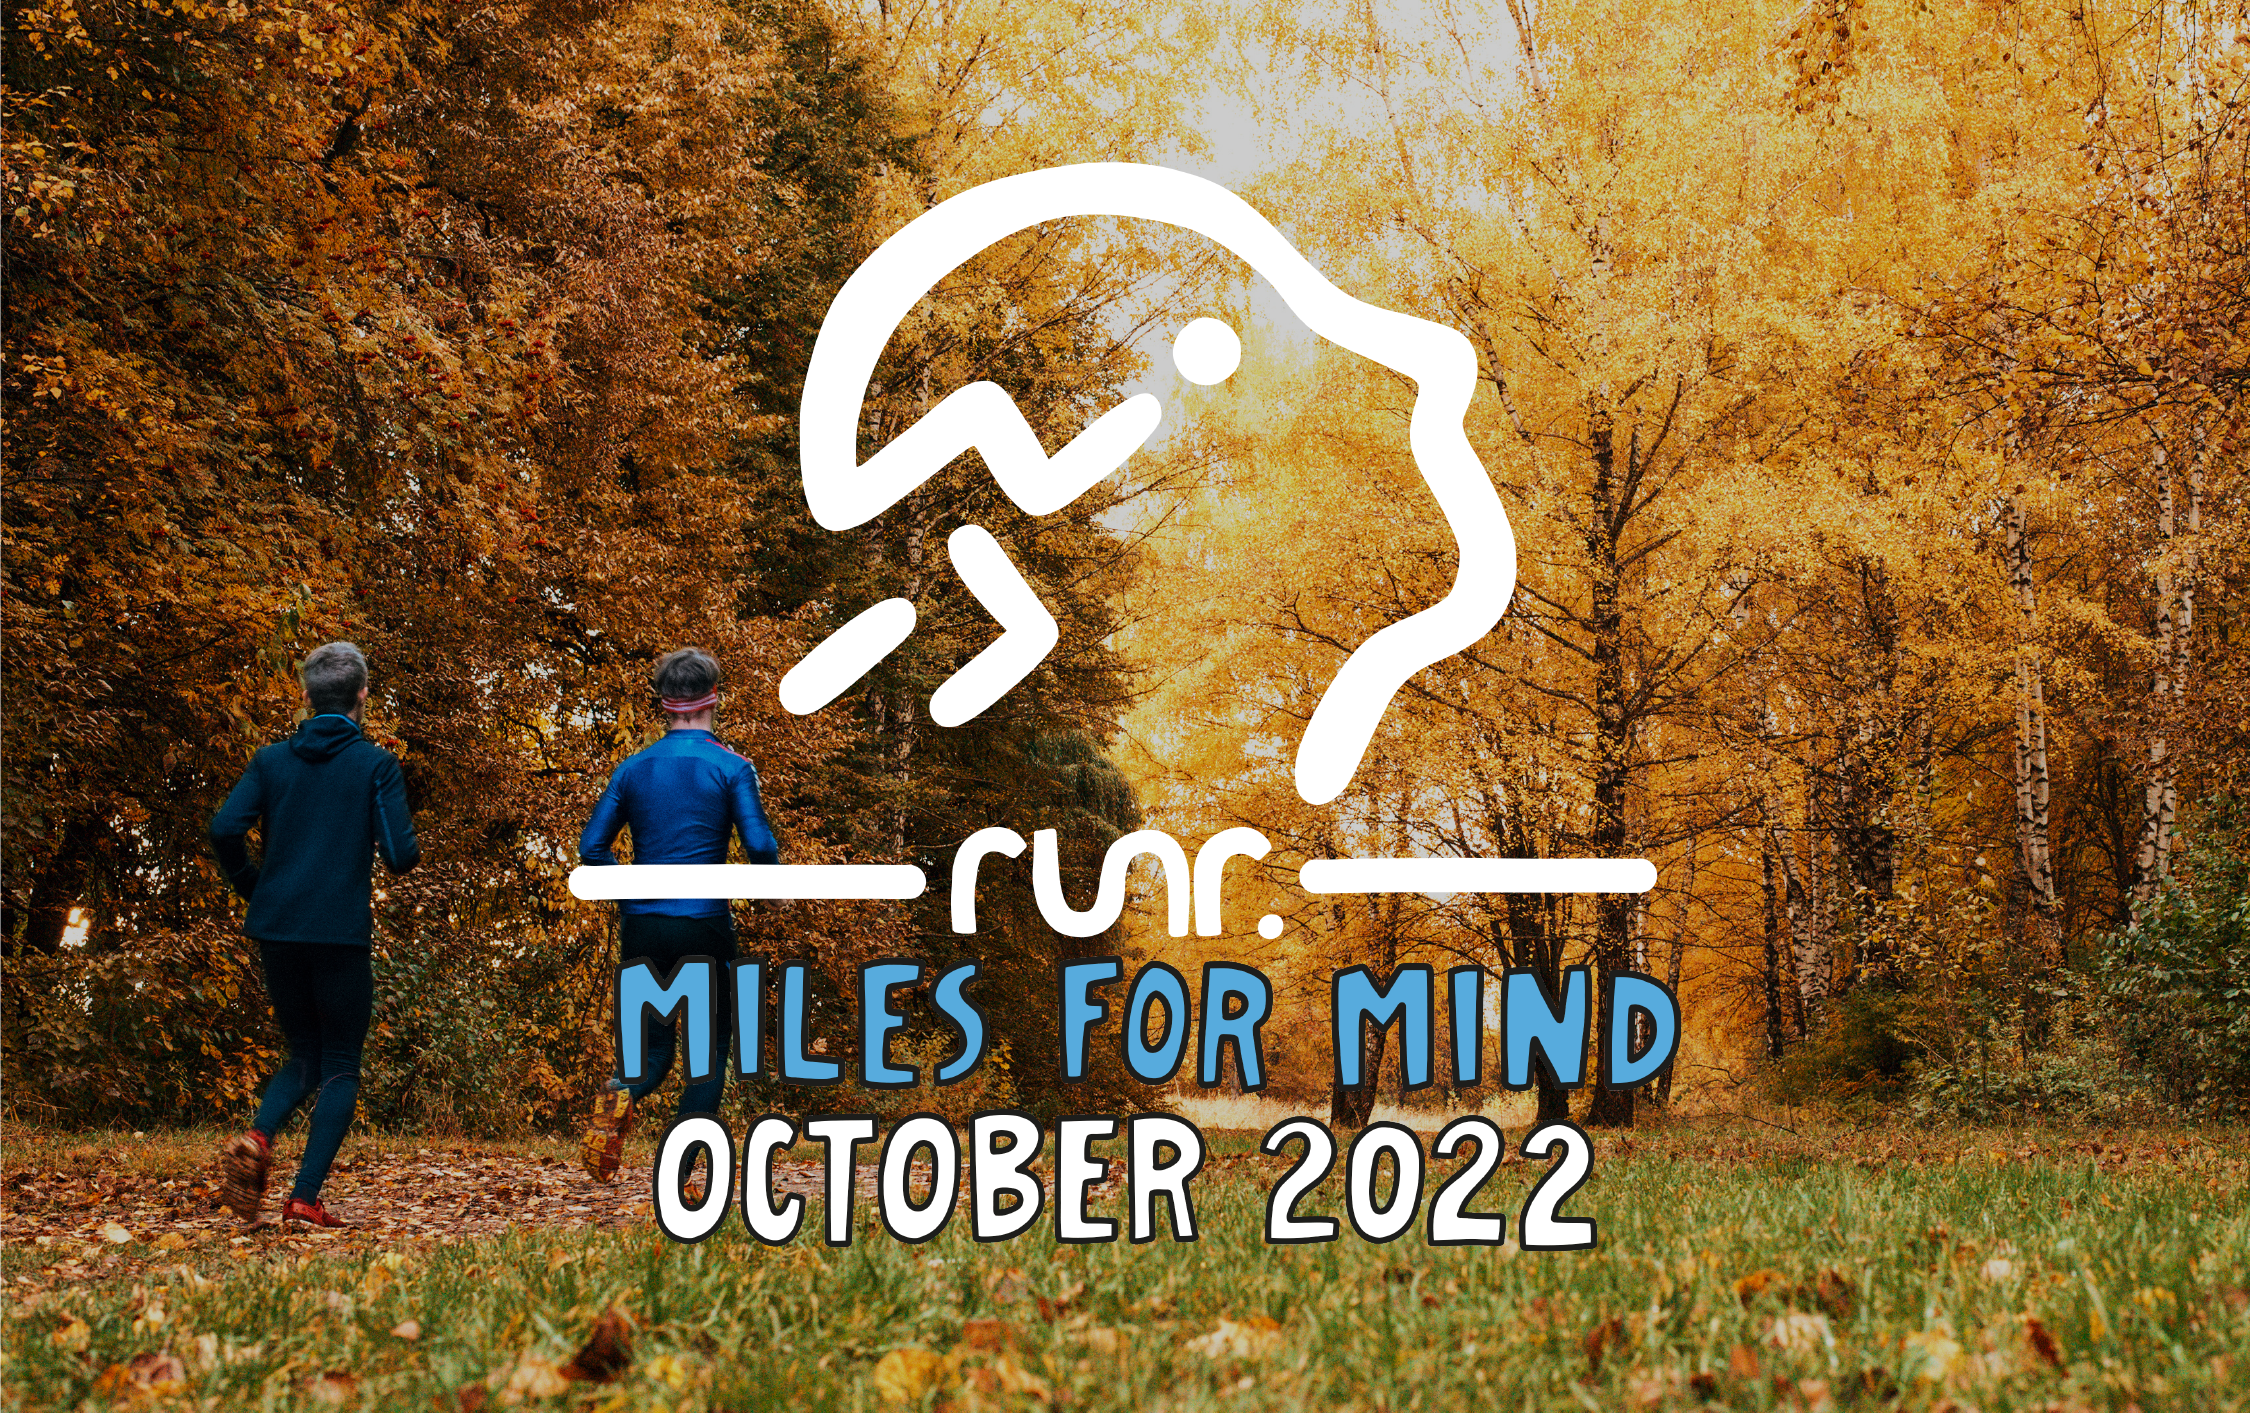 Miles for Mind - October 2022